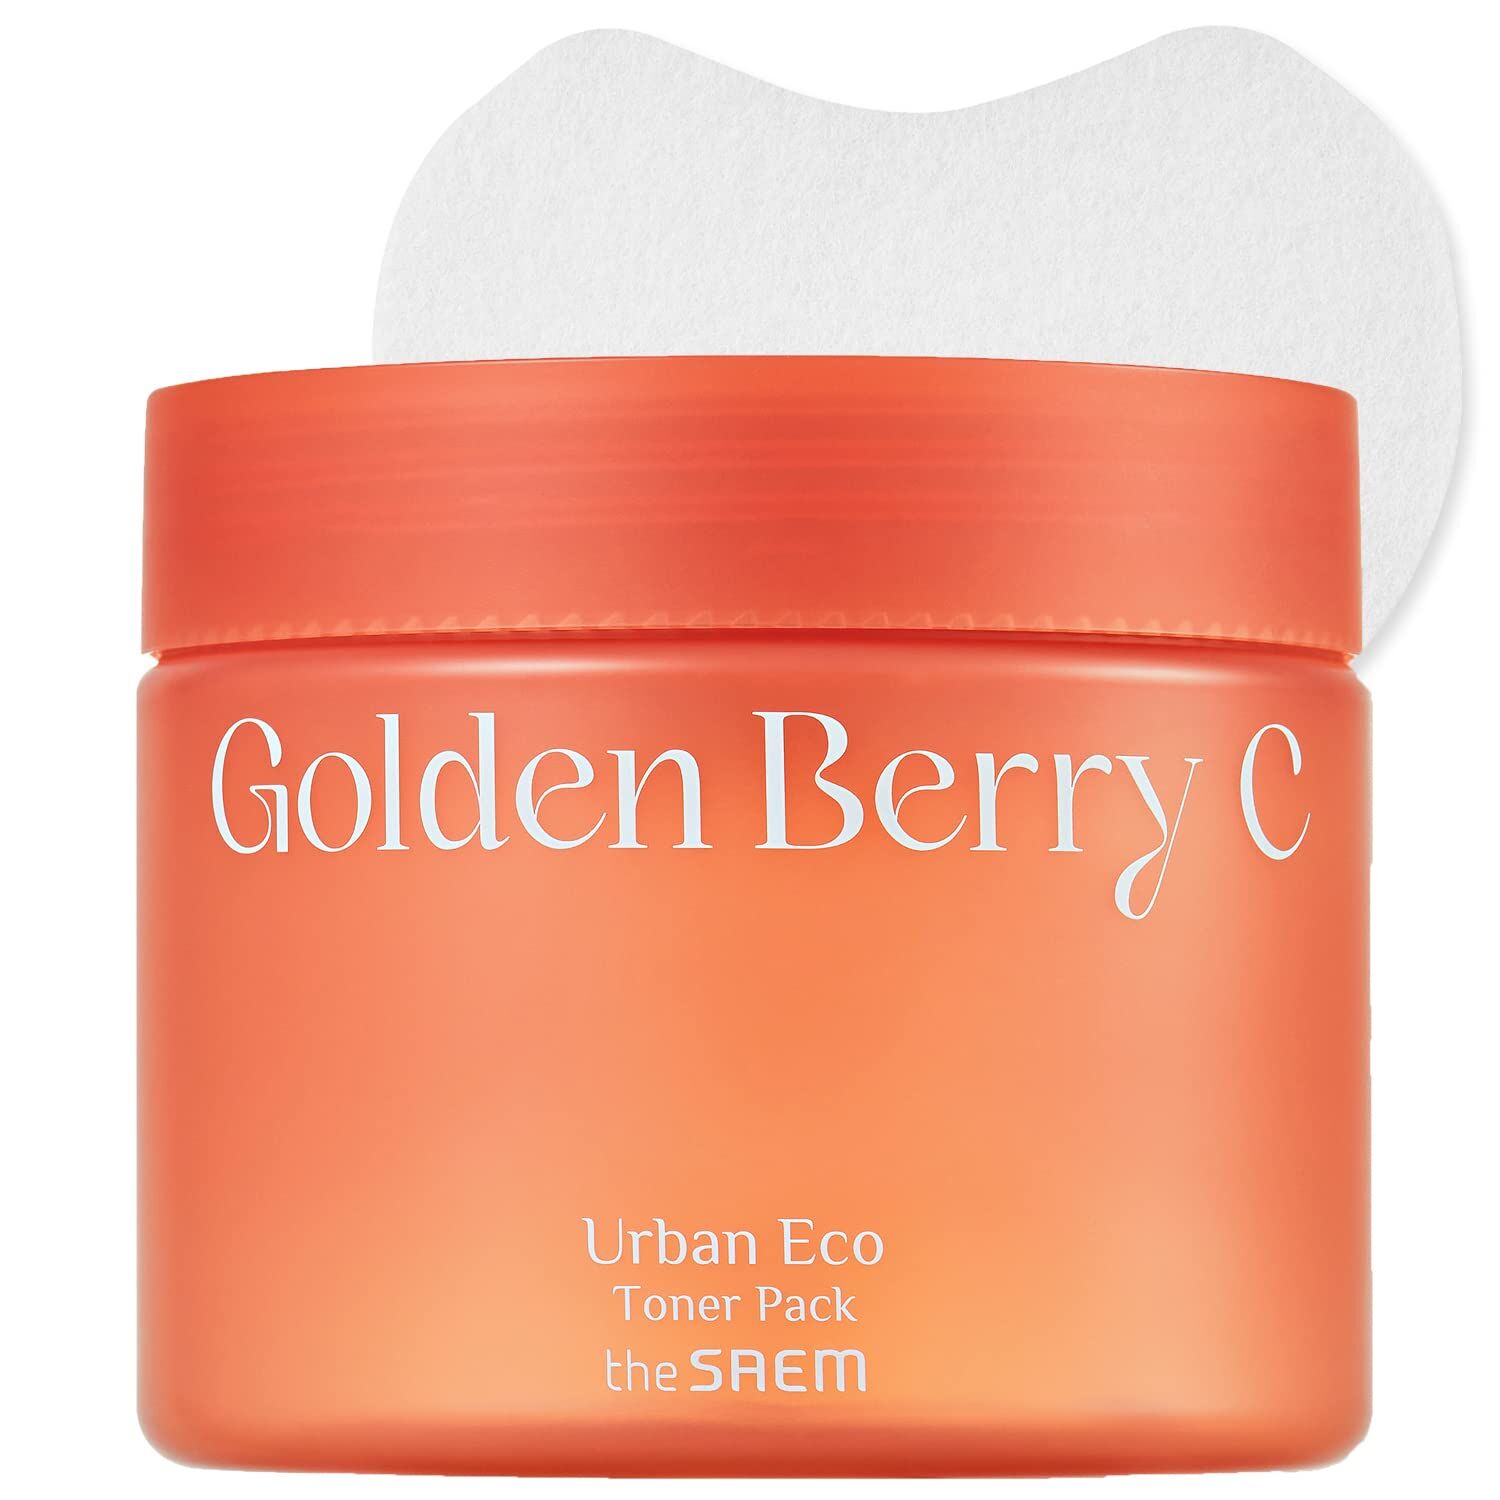 The SAEM Urban Eco Golden Berry C Toner Pack